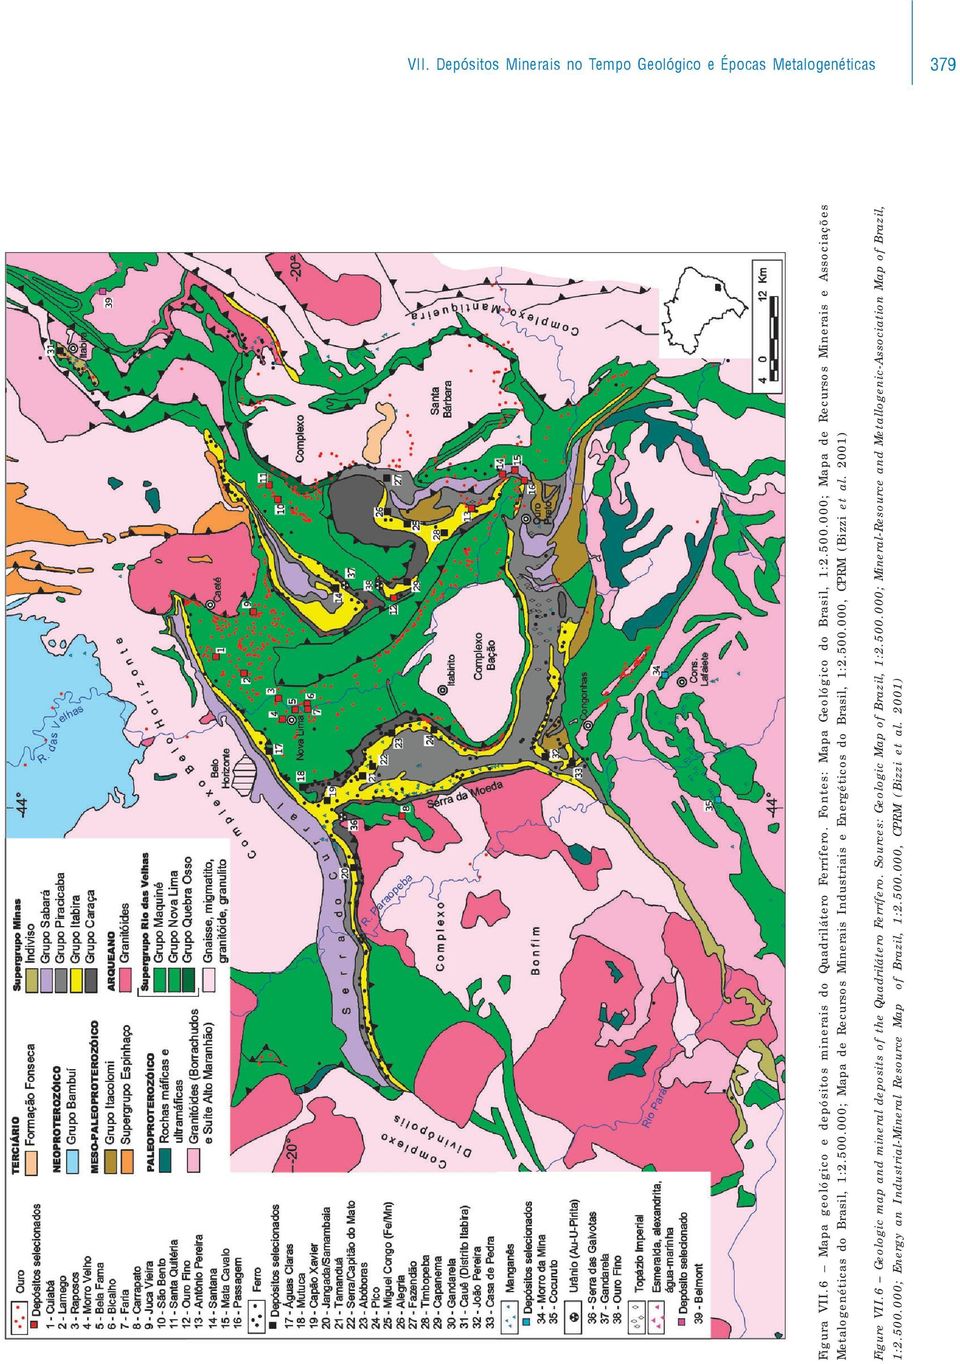 2001) Figura VII.6 Mapa geológico e depósitos minerais do Quadrilátero Ferrífero. Fontes: Mapa Geológico do Brasil, 1:2.500.